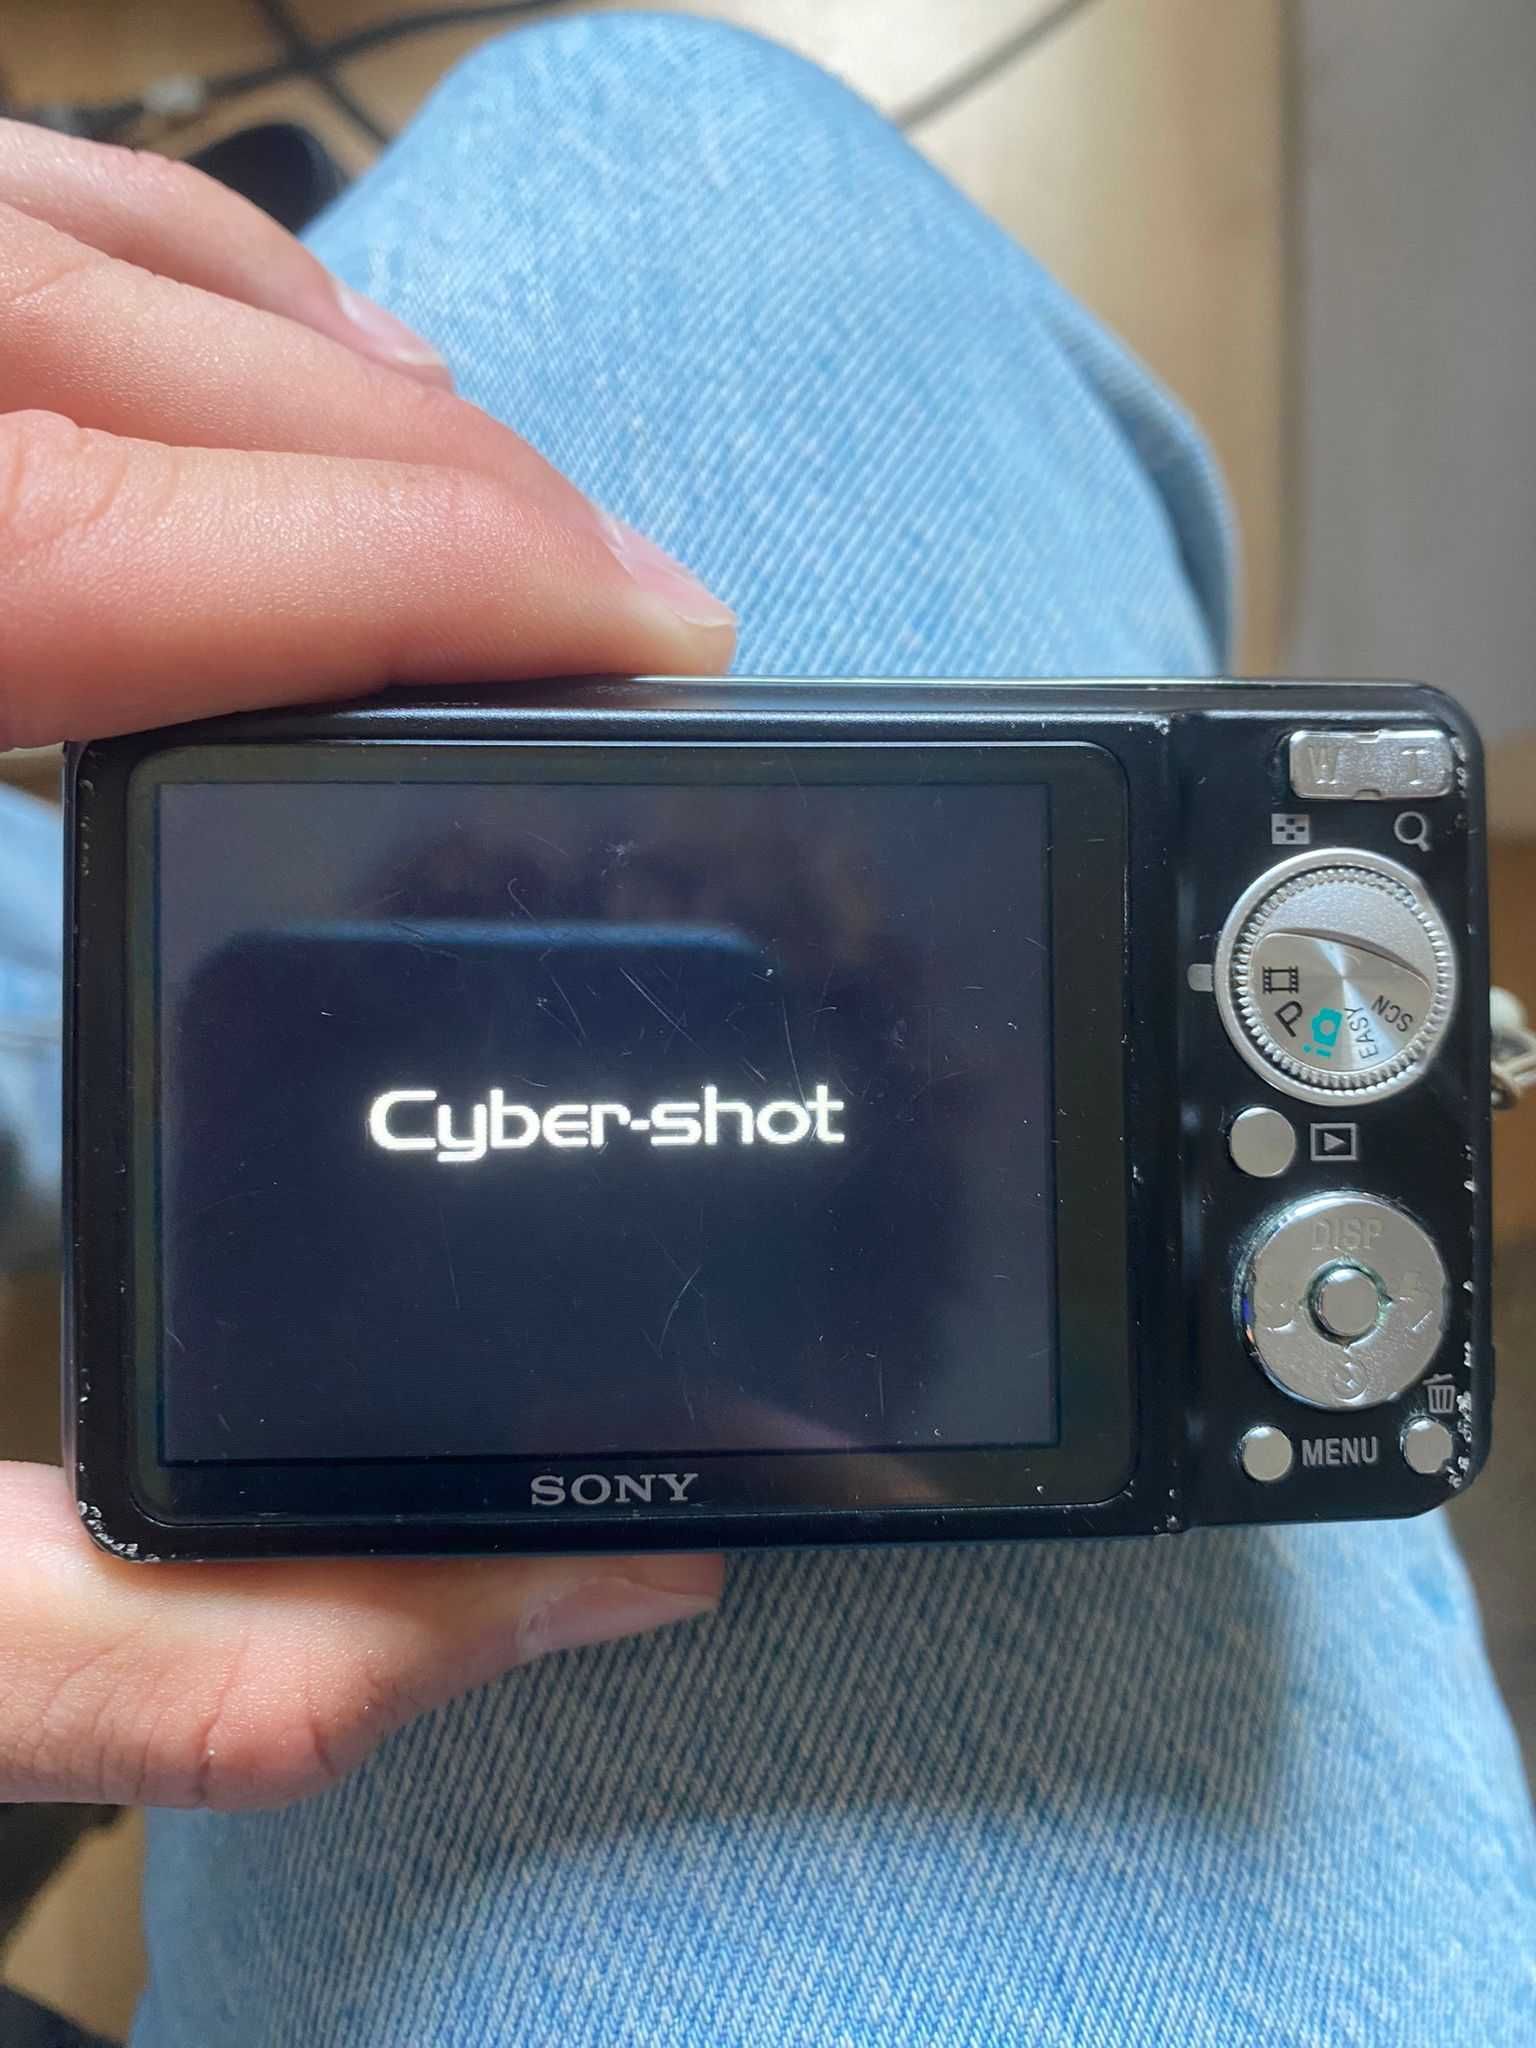 Sony Cibershot camera digital